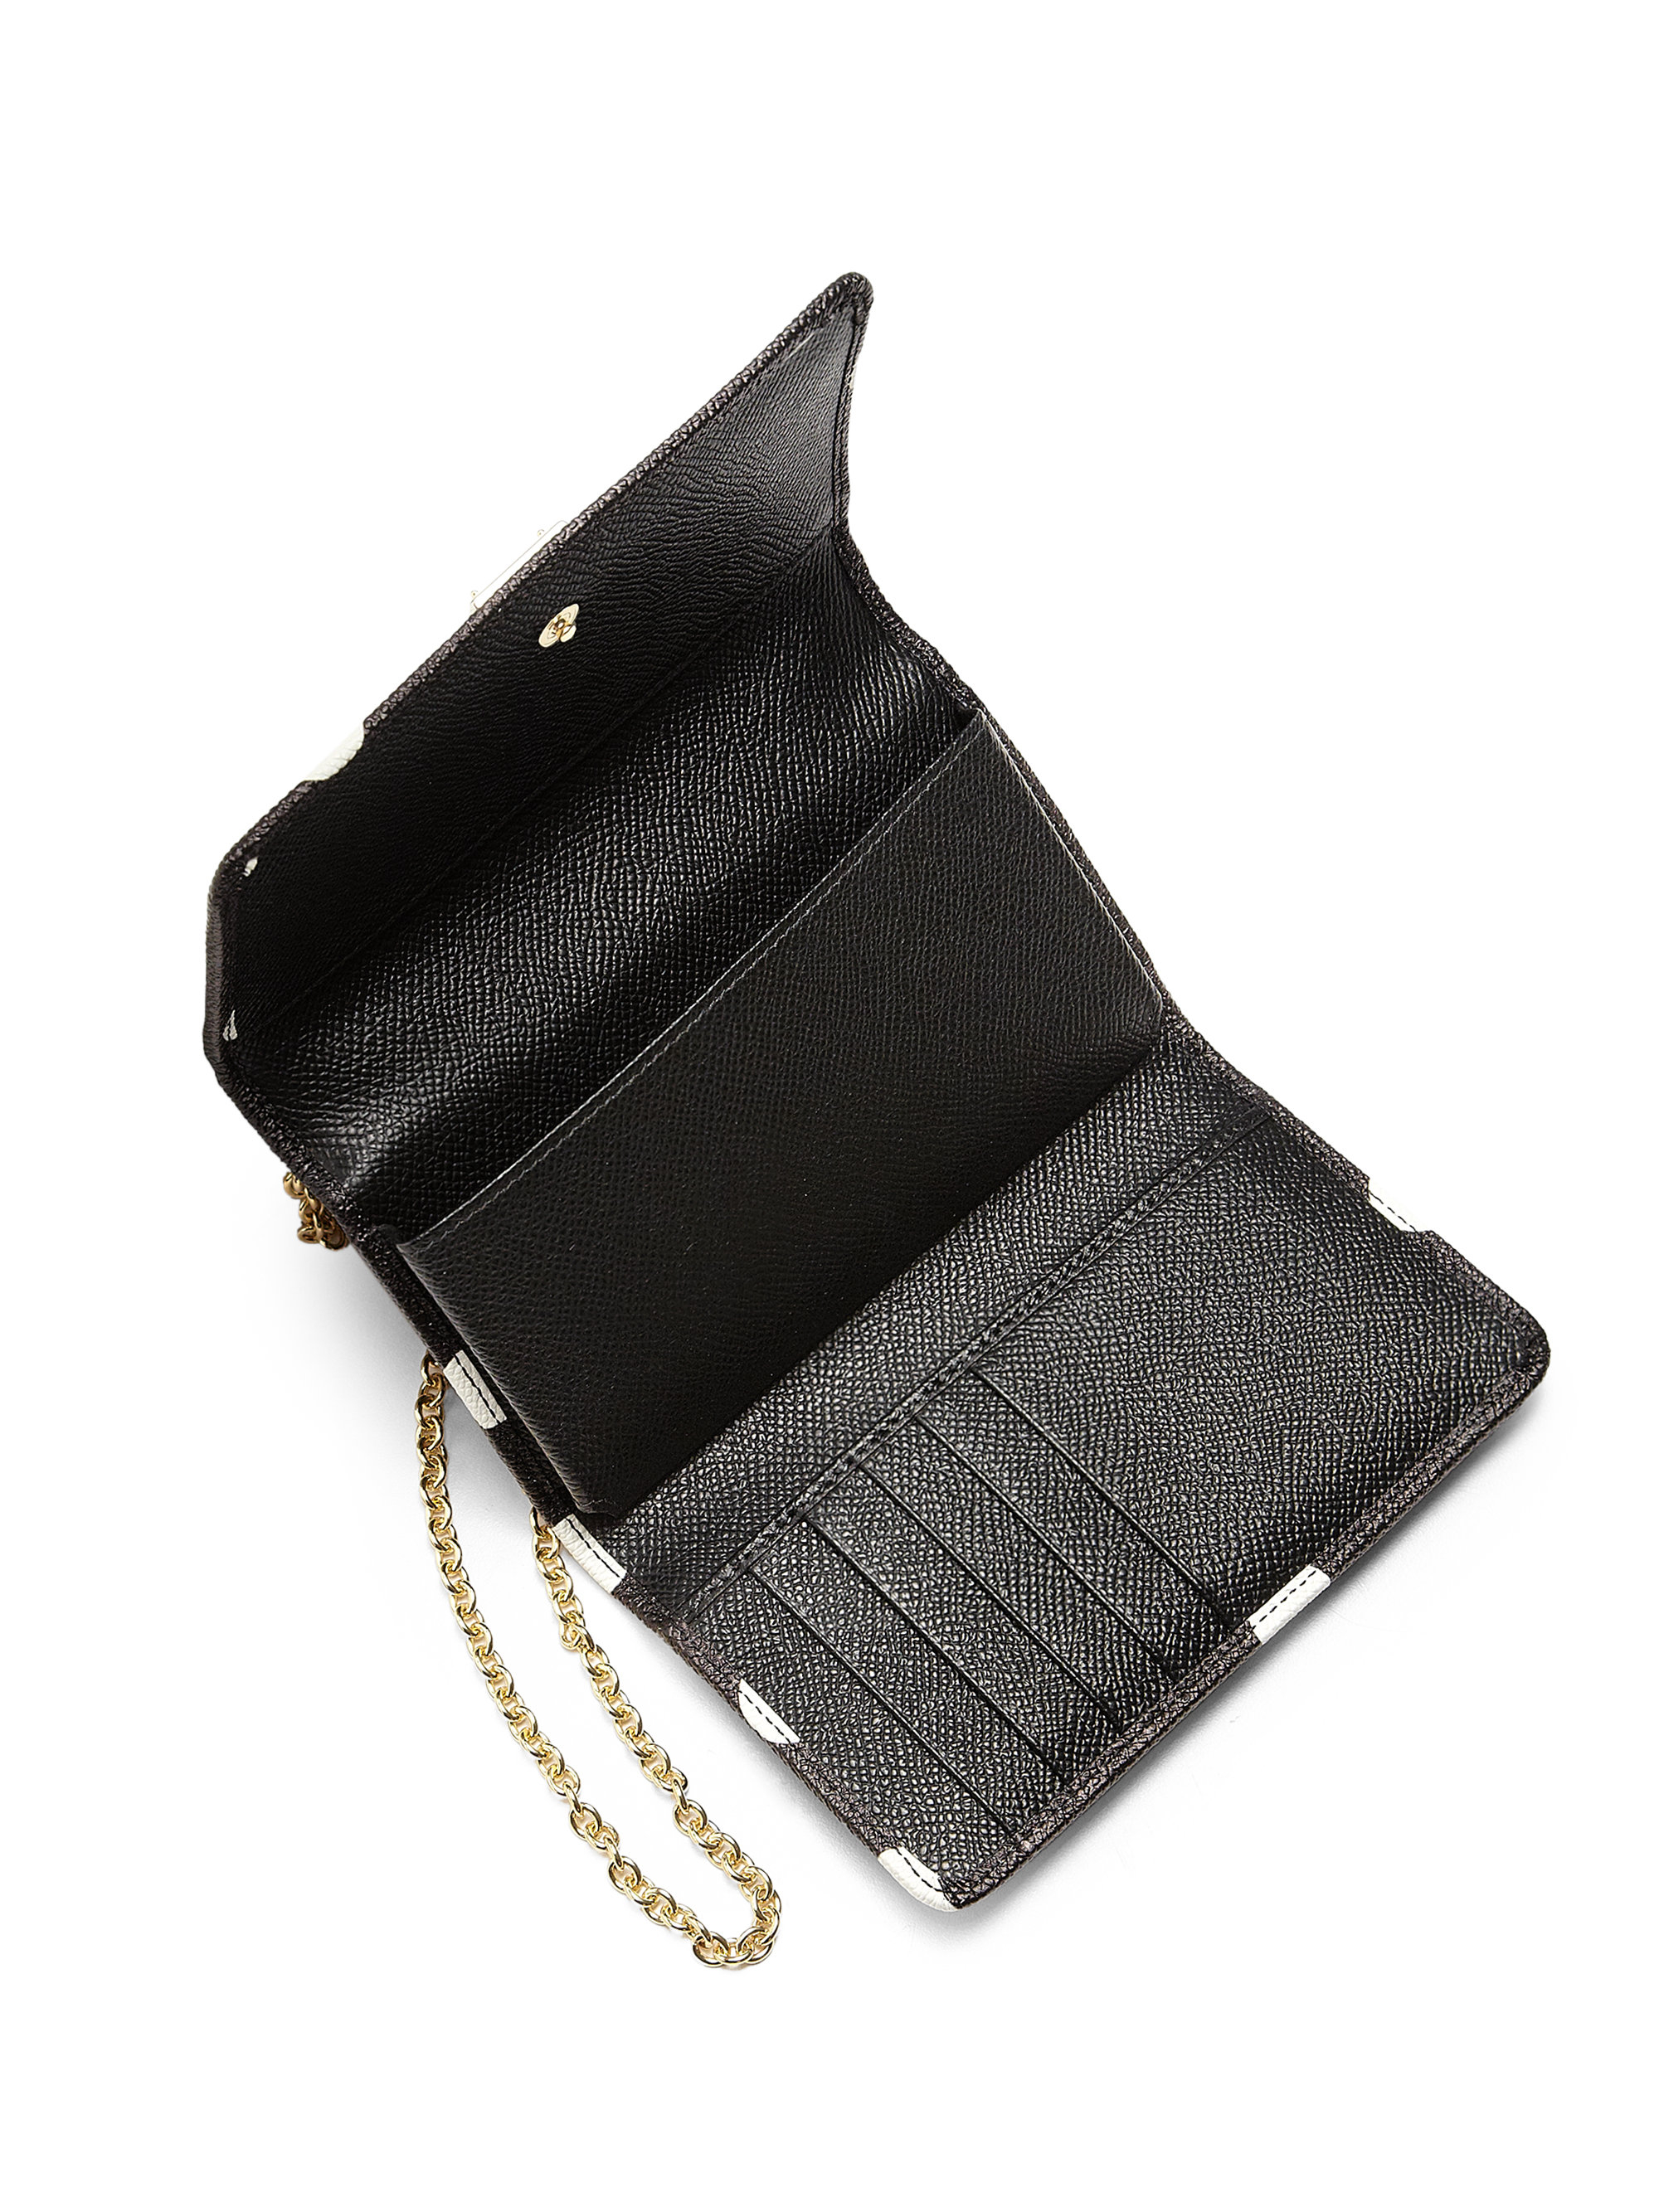 Dolce & Gabbana Polka-Dot Mini Chain Crossbody Bag in Black-White (Black) - Lyst